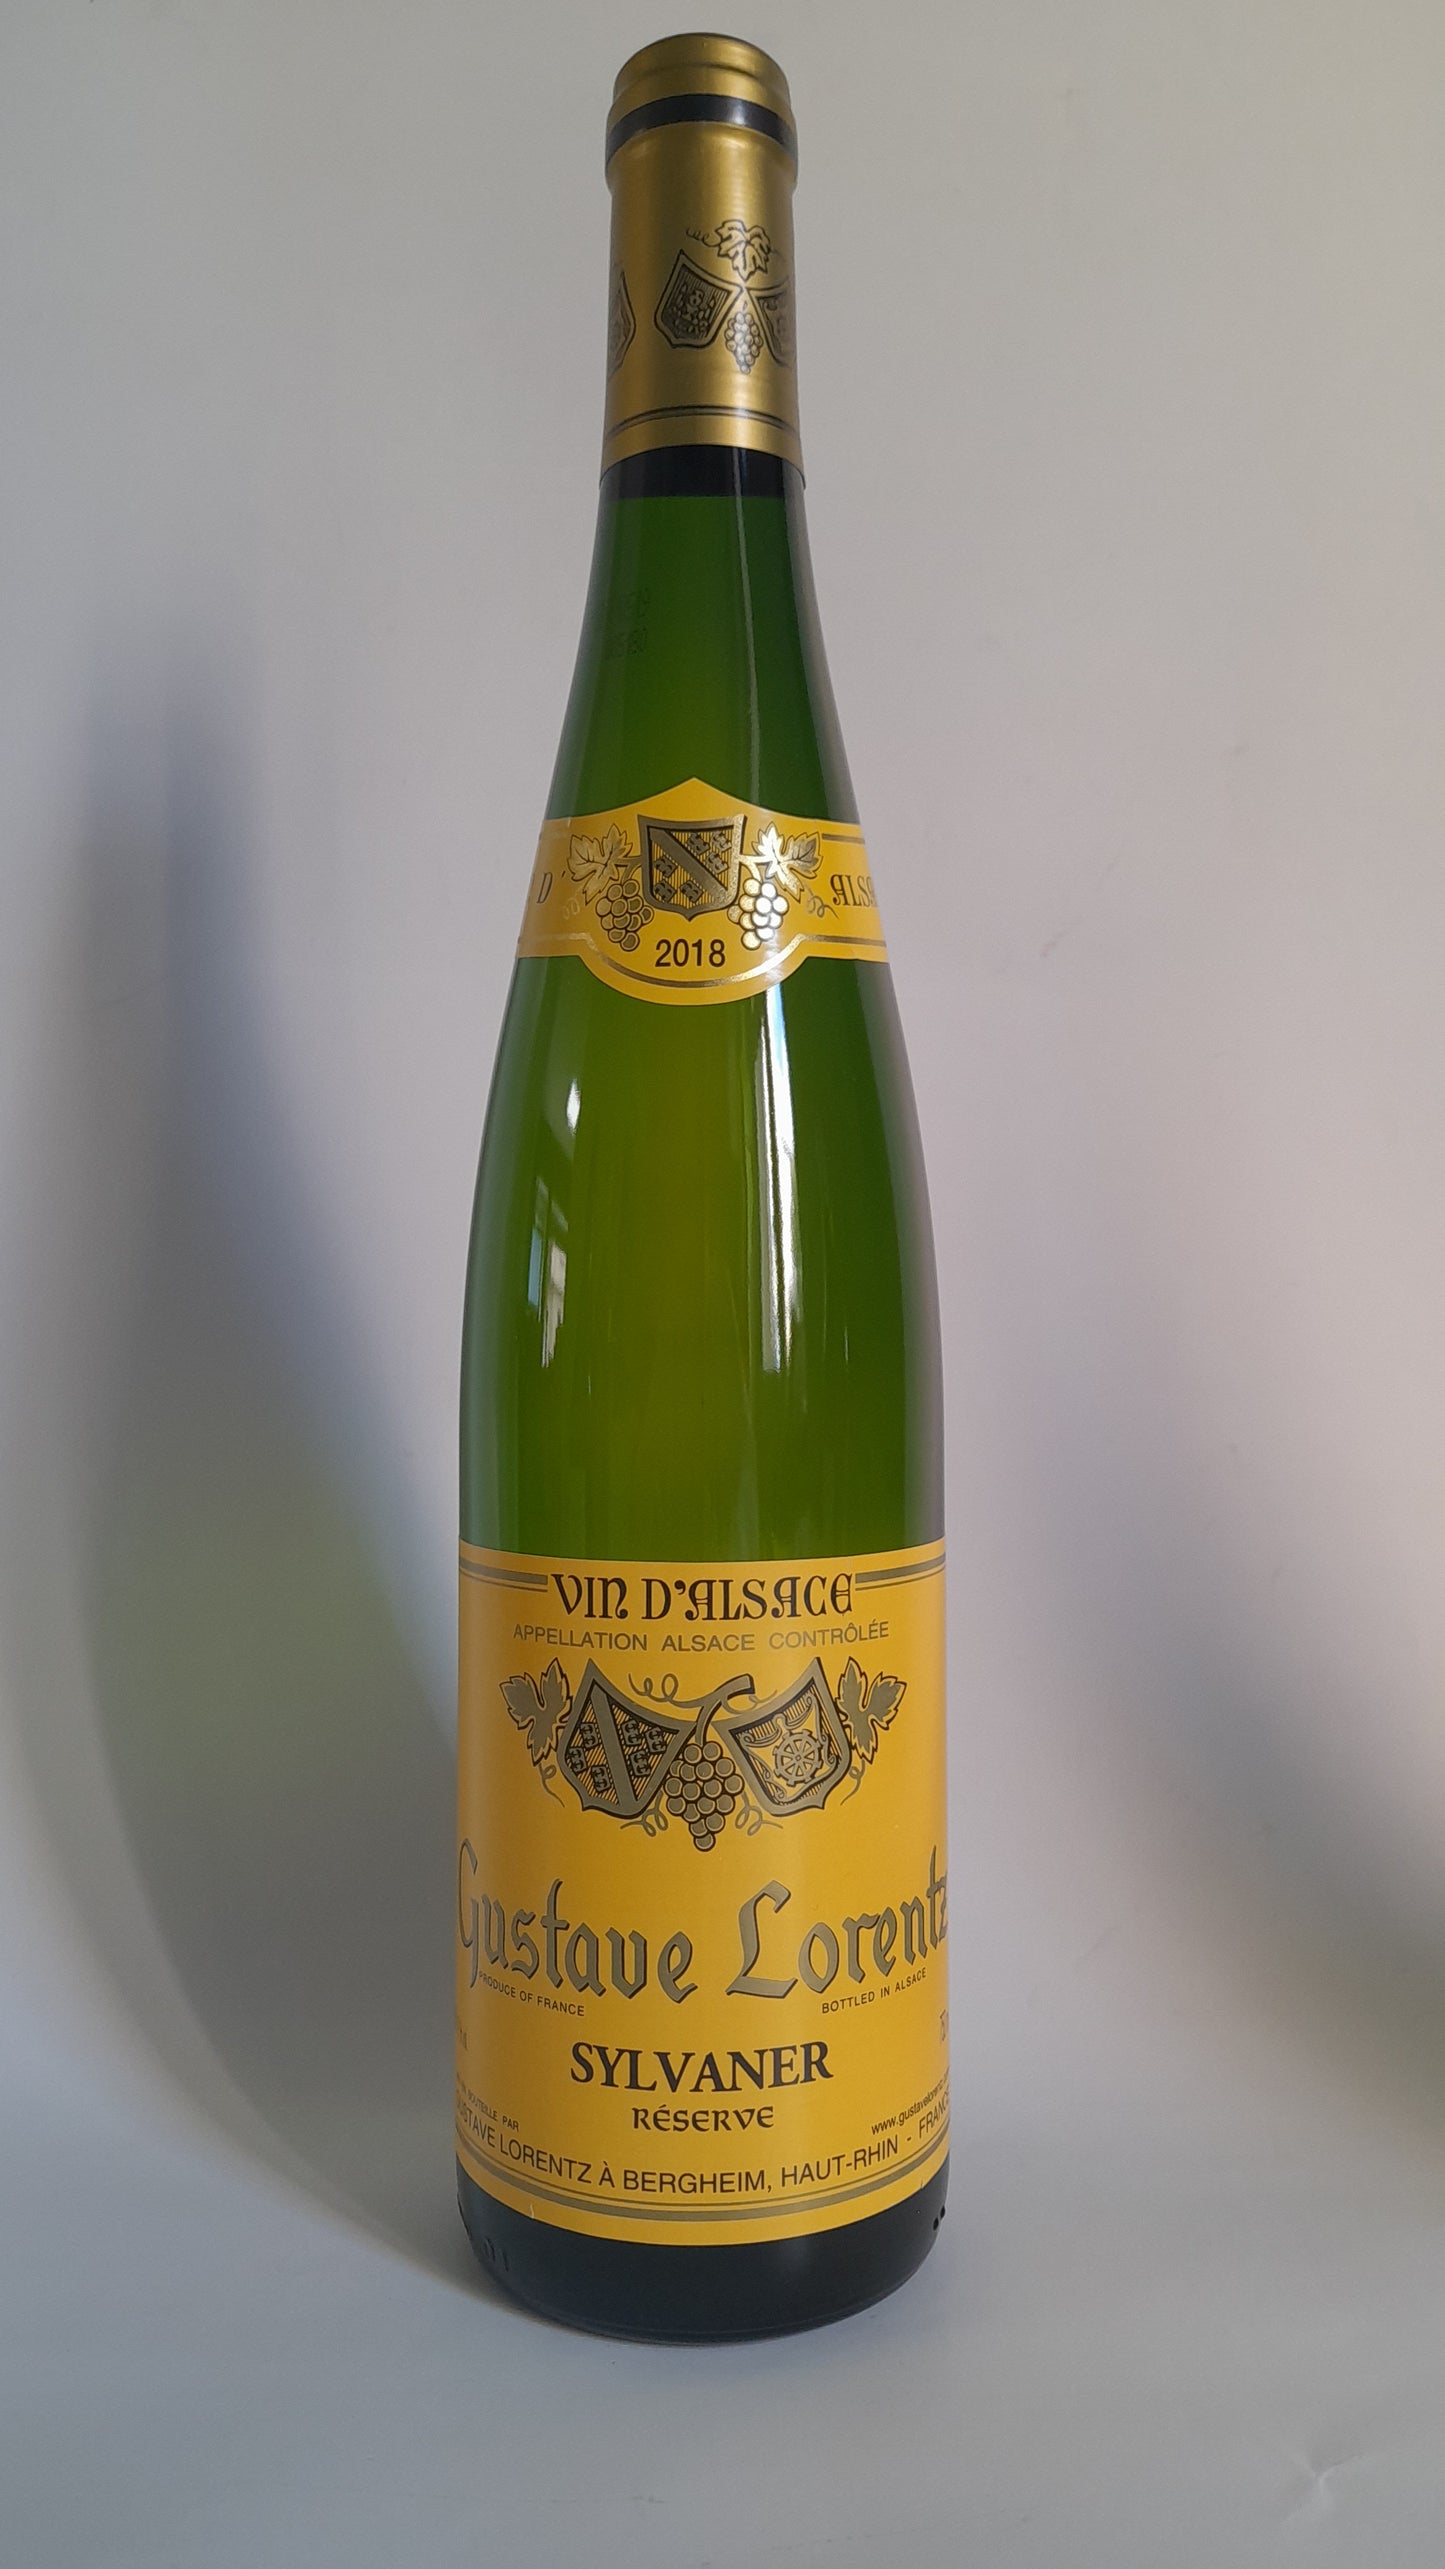 Vin d'Alsace Gustave Lorentz